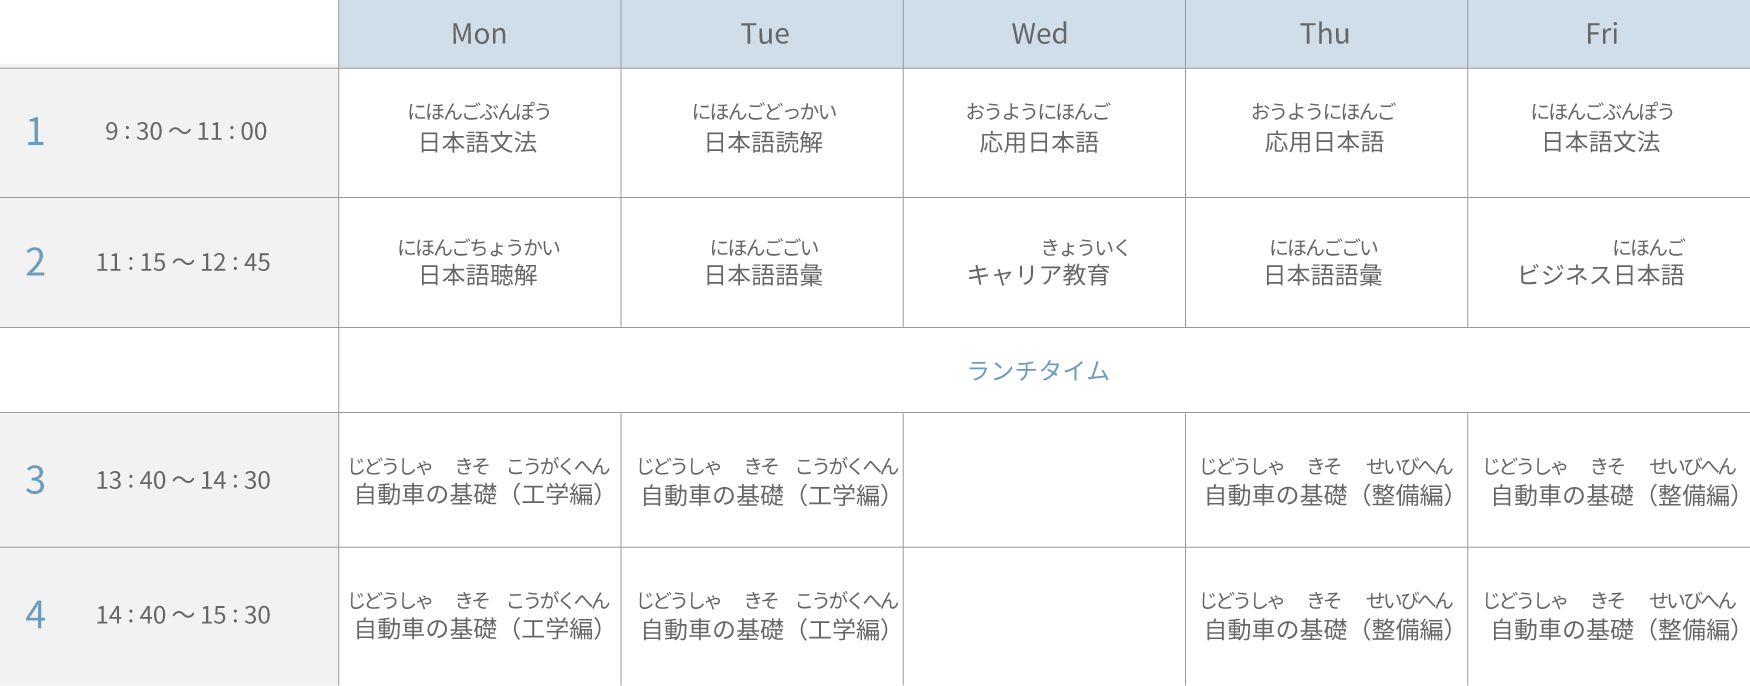 Timetable画像